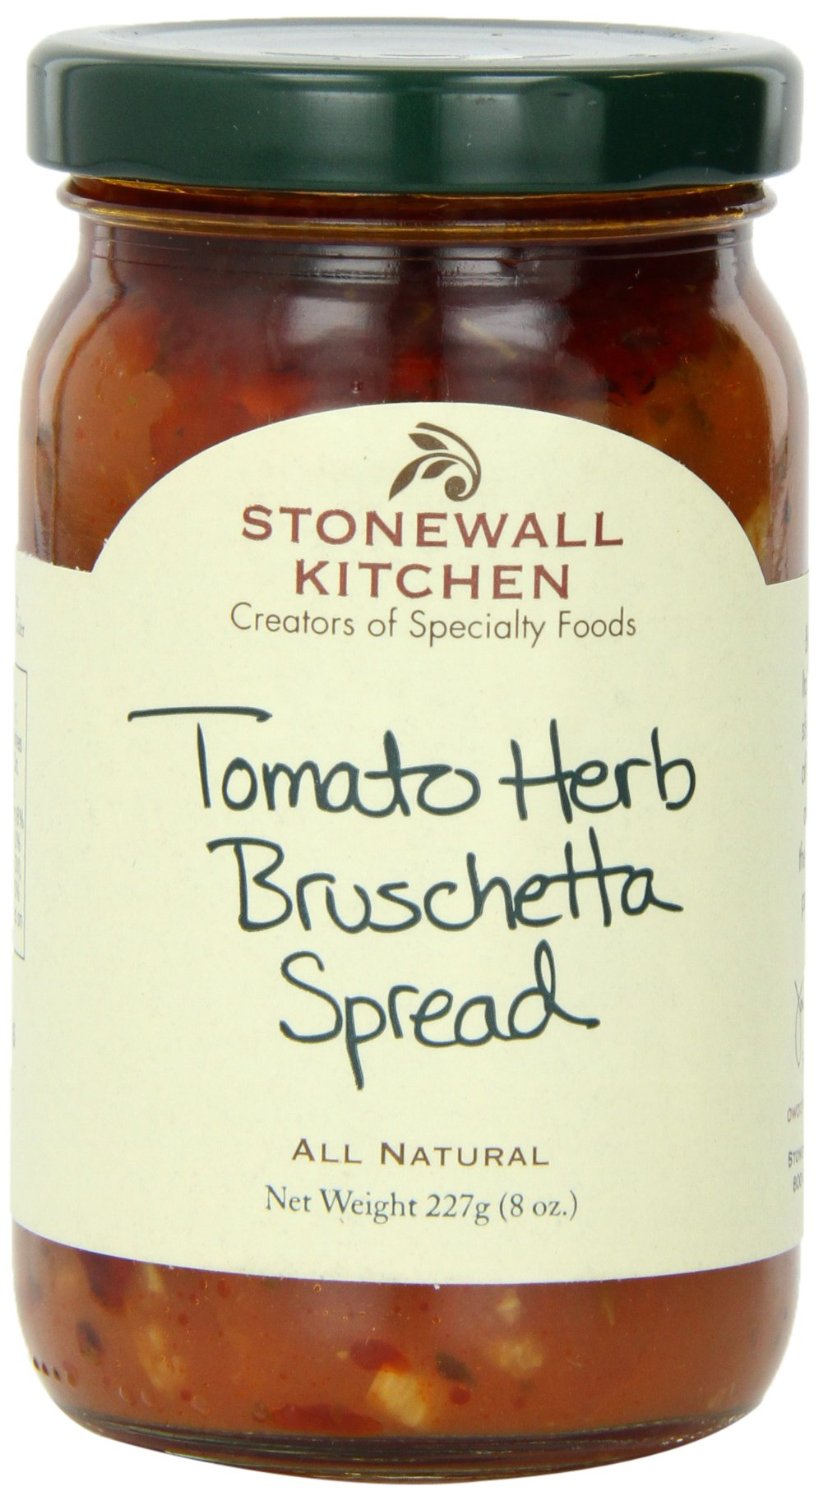 Stonewall Kitchen Bruschetta Spread, Tomato Herb, 8 oz.